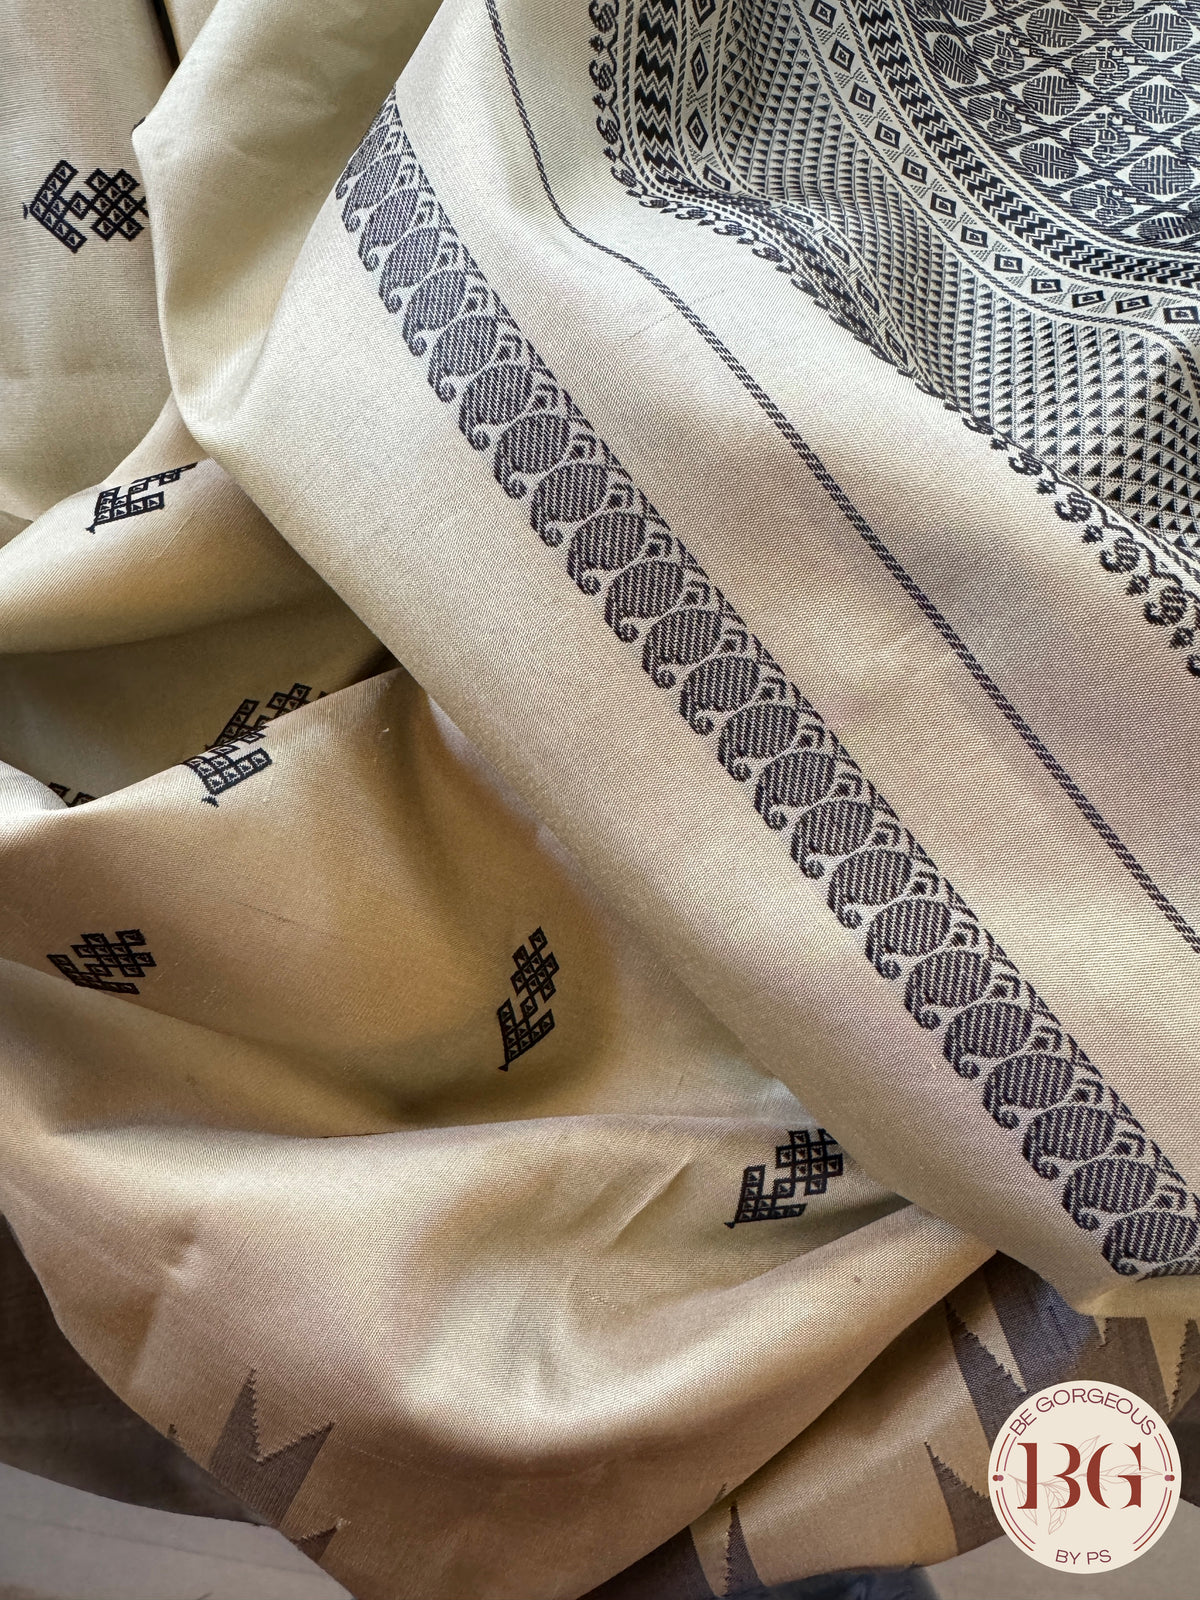 Gadwal handloom pure silk saree - no zari off white body with grey